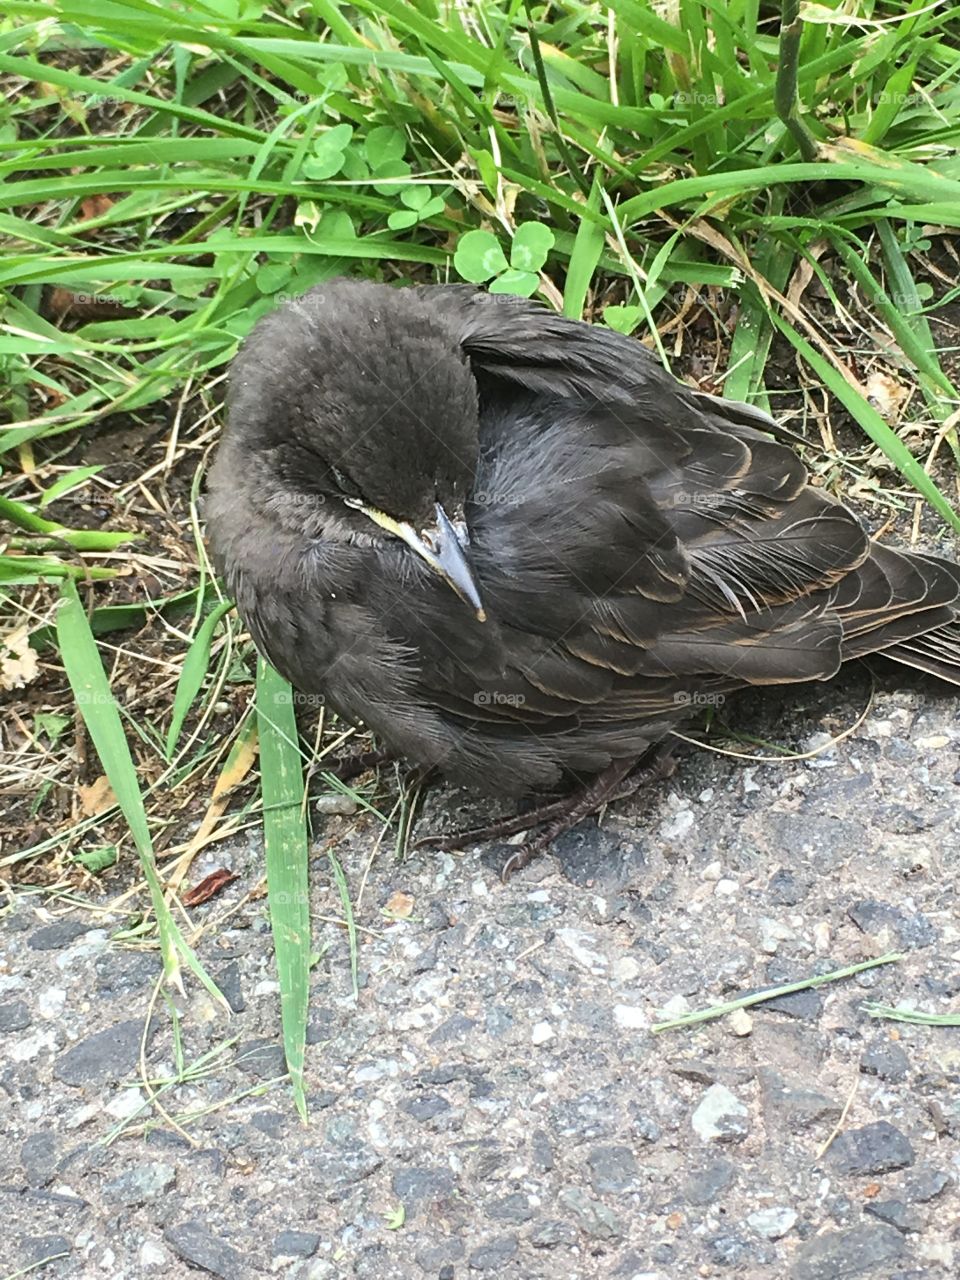 Small bird with tucked head